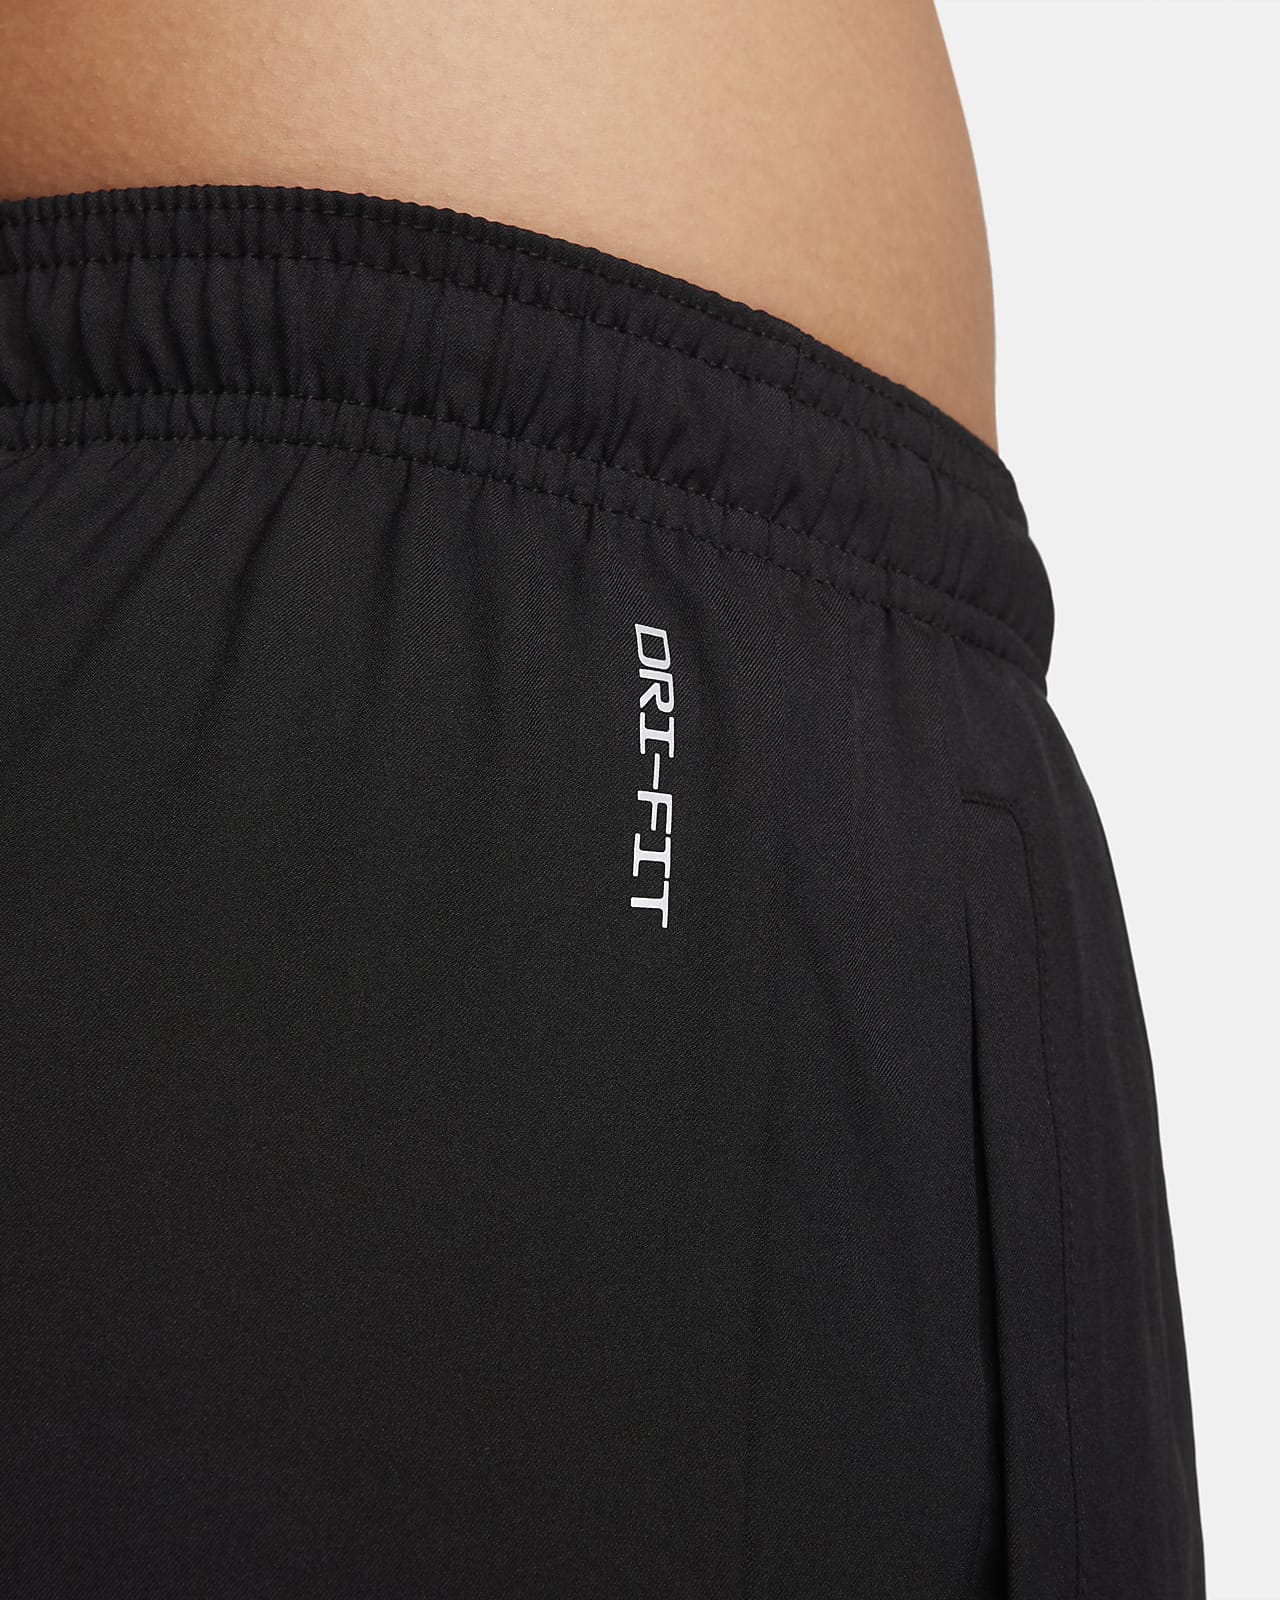 Nike Dri-FIT Challenger Men's Woven Running Pants, Black, X-Large